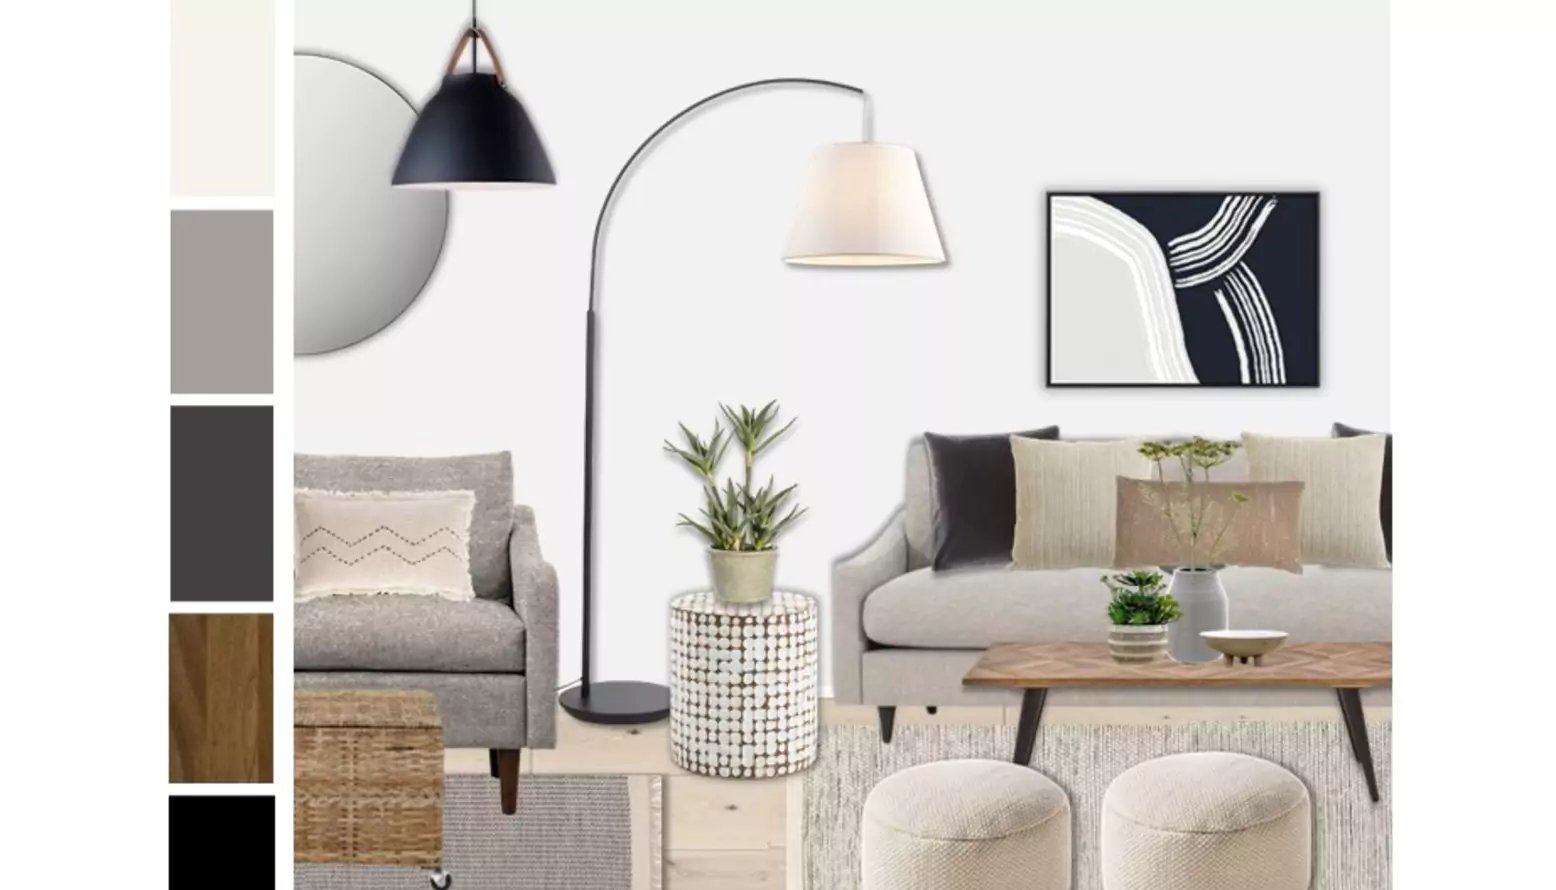 minimalist black and white living room